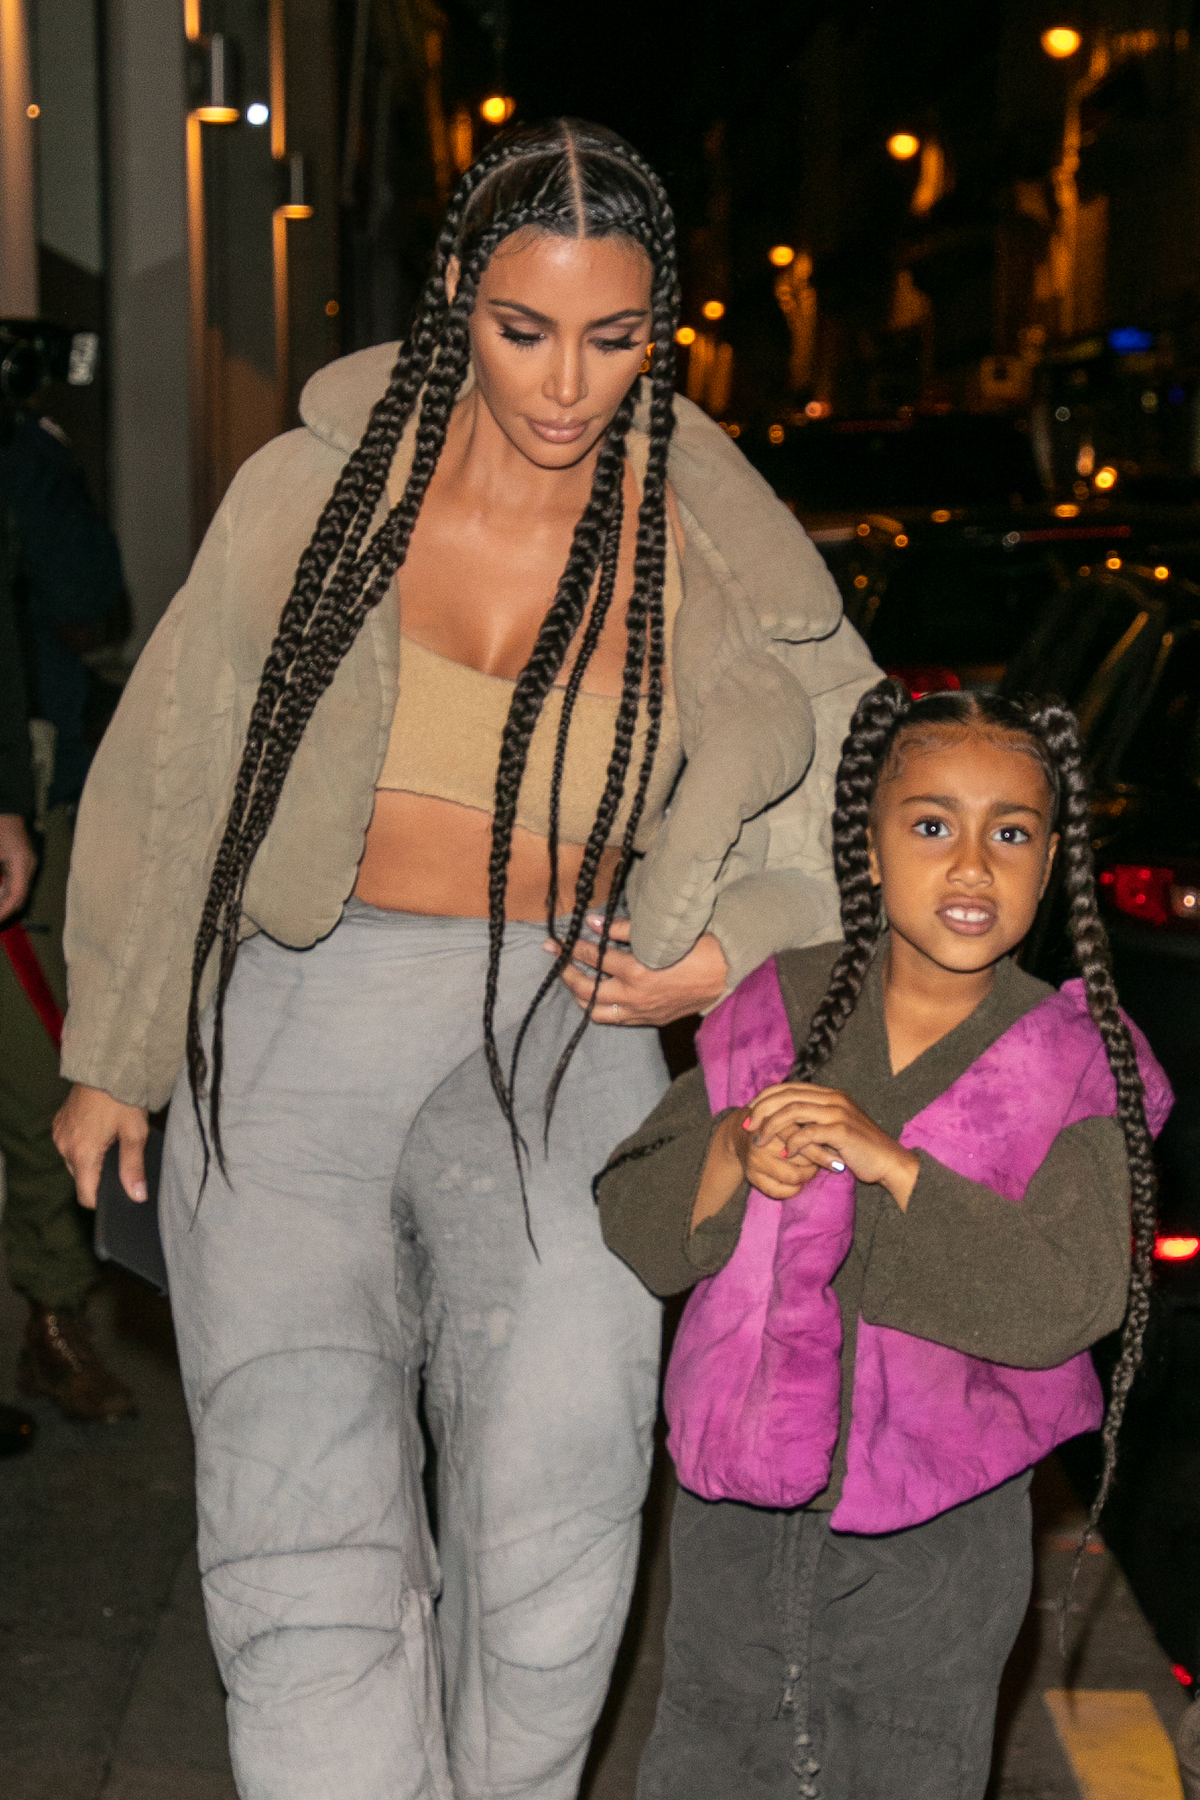 Kim Kardashian West and North West walk together wearing matching braids.